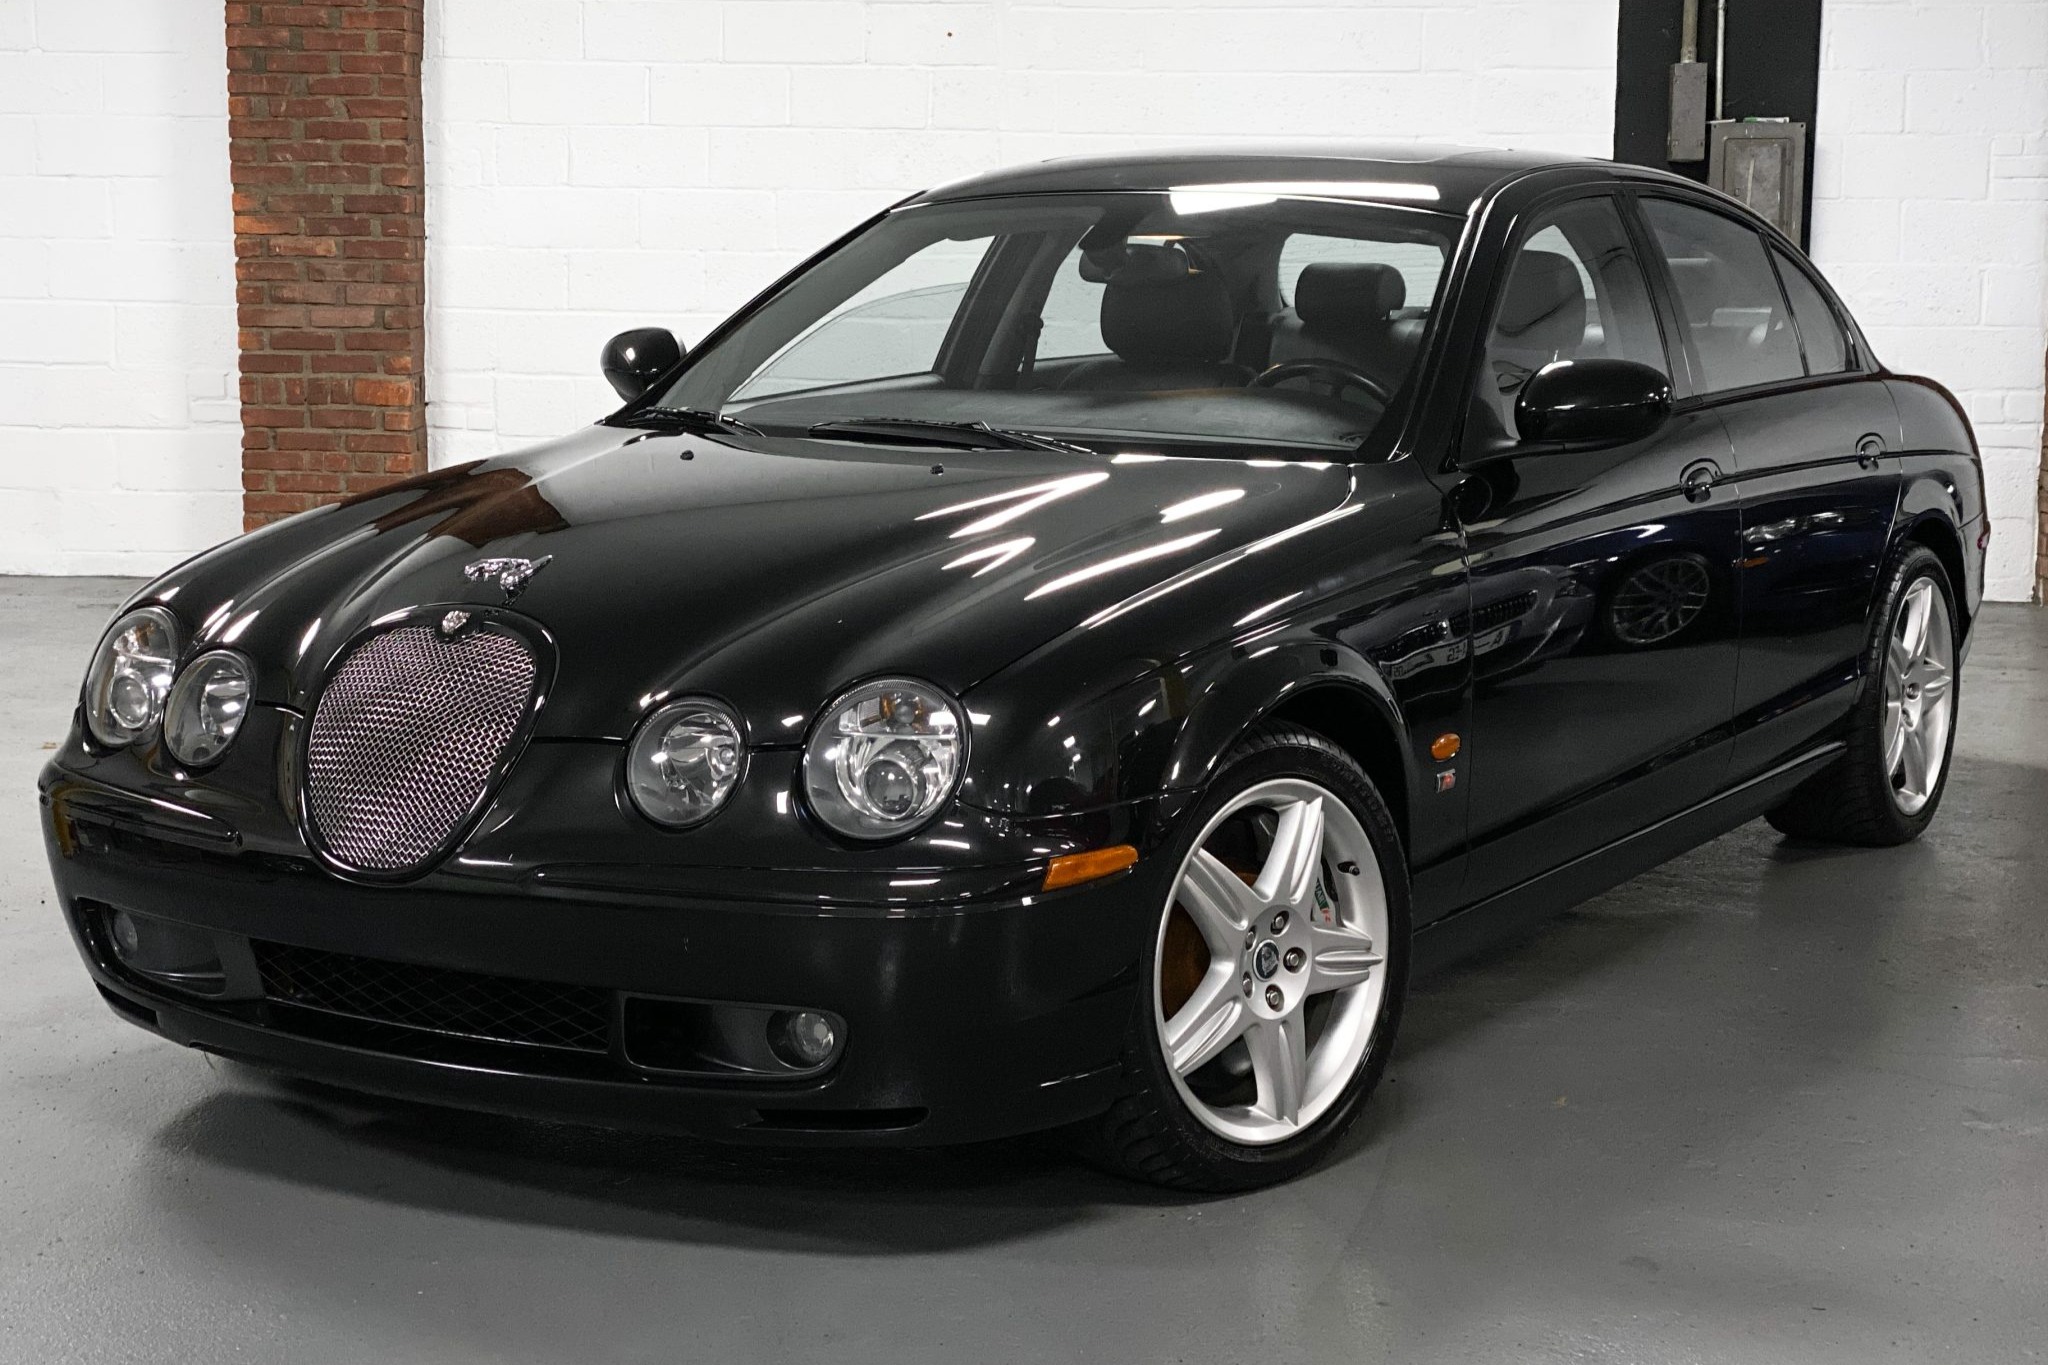 No Reserve: 38k-Mile 2003 Jaguar S-Type R for sale on BaT Auctions - sold  for $16,500 on April 13, 2022 (Lot #70,505) | Bring a Trailer